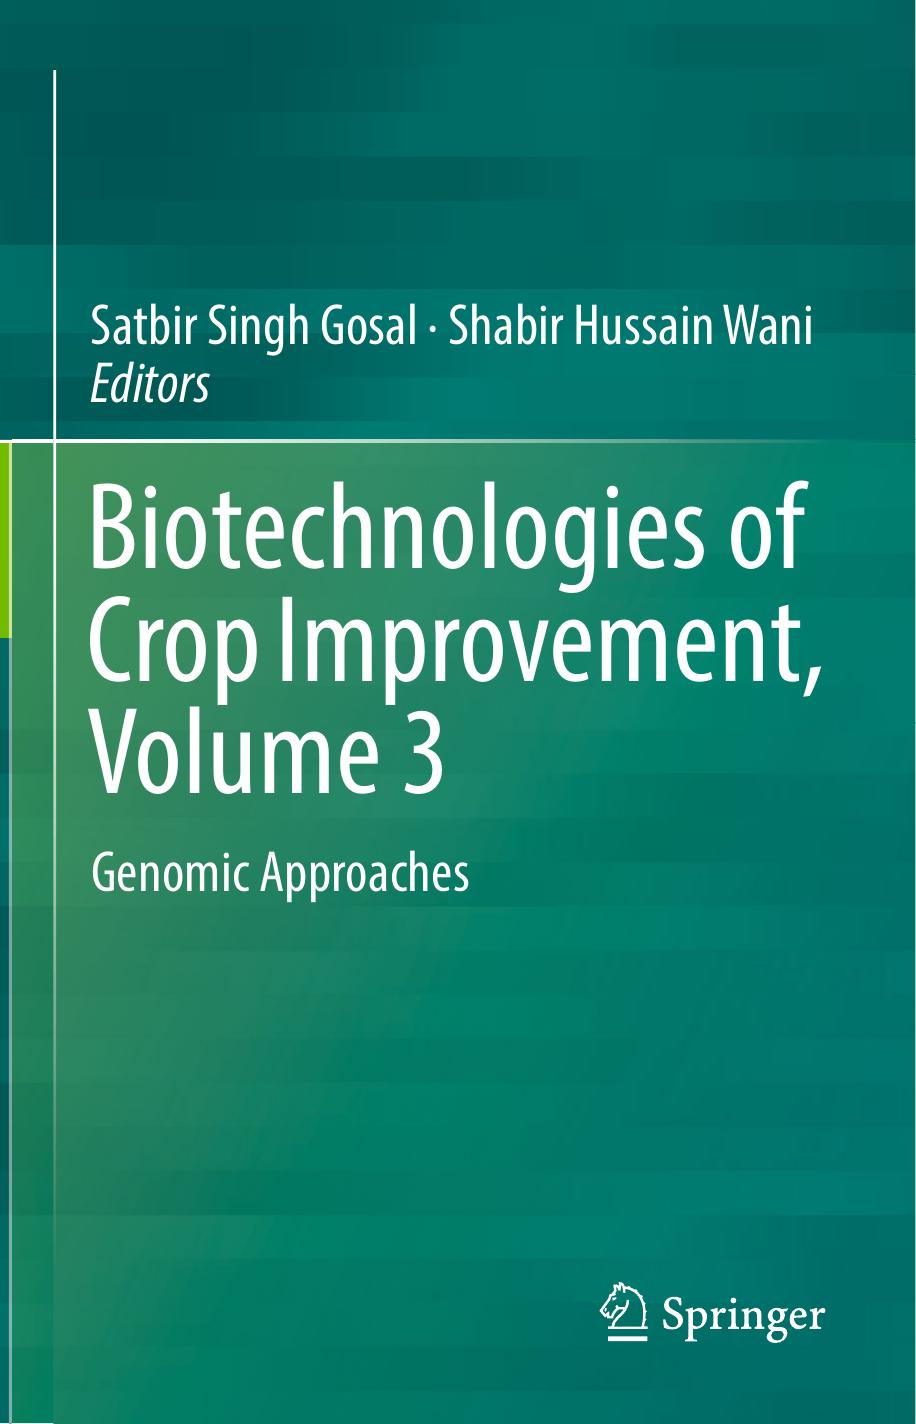 Biotechnologies of Crop Improvement, Volume 3 Genomic Approaches 2018